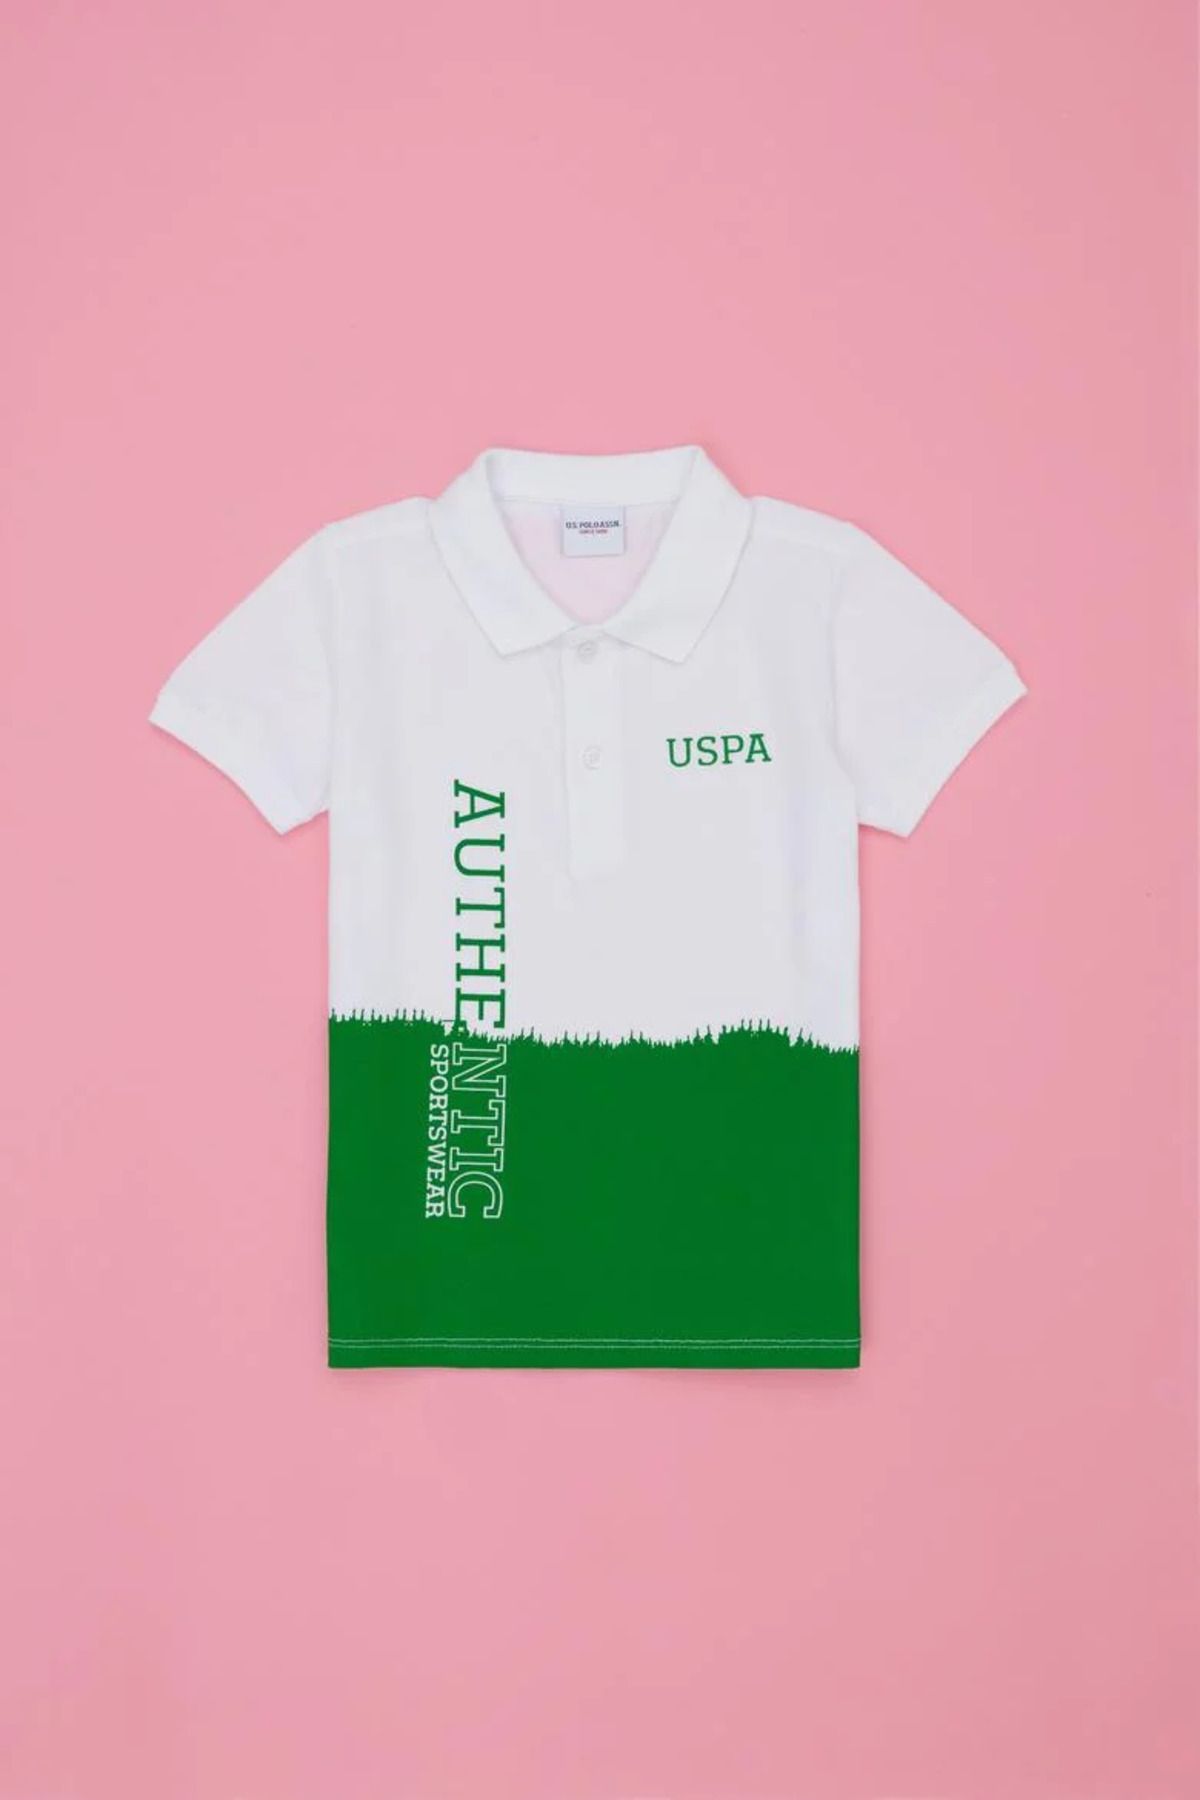 U.S. Polo Assn. Erkek Çocuk Yeşil Polo Yaka T-shirt